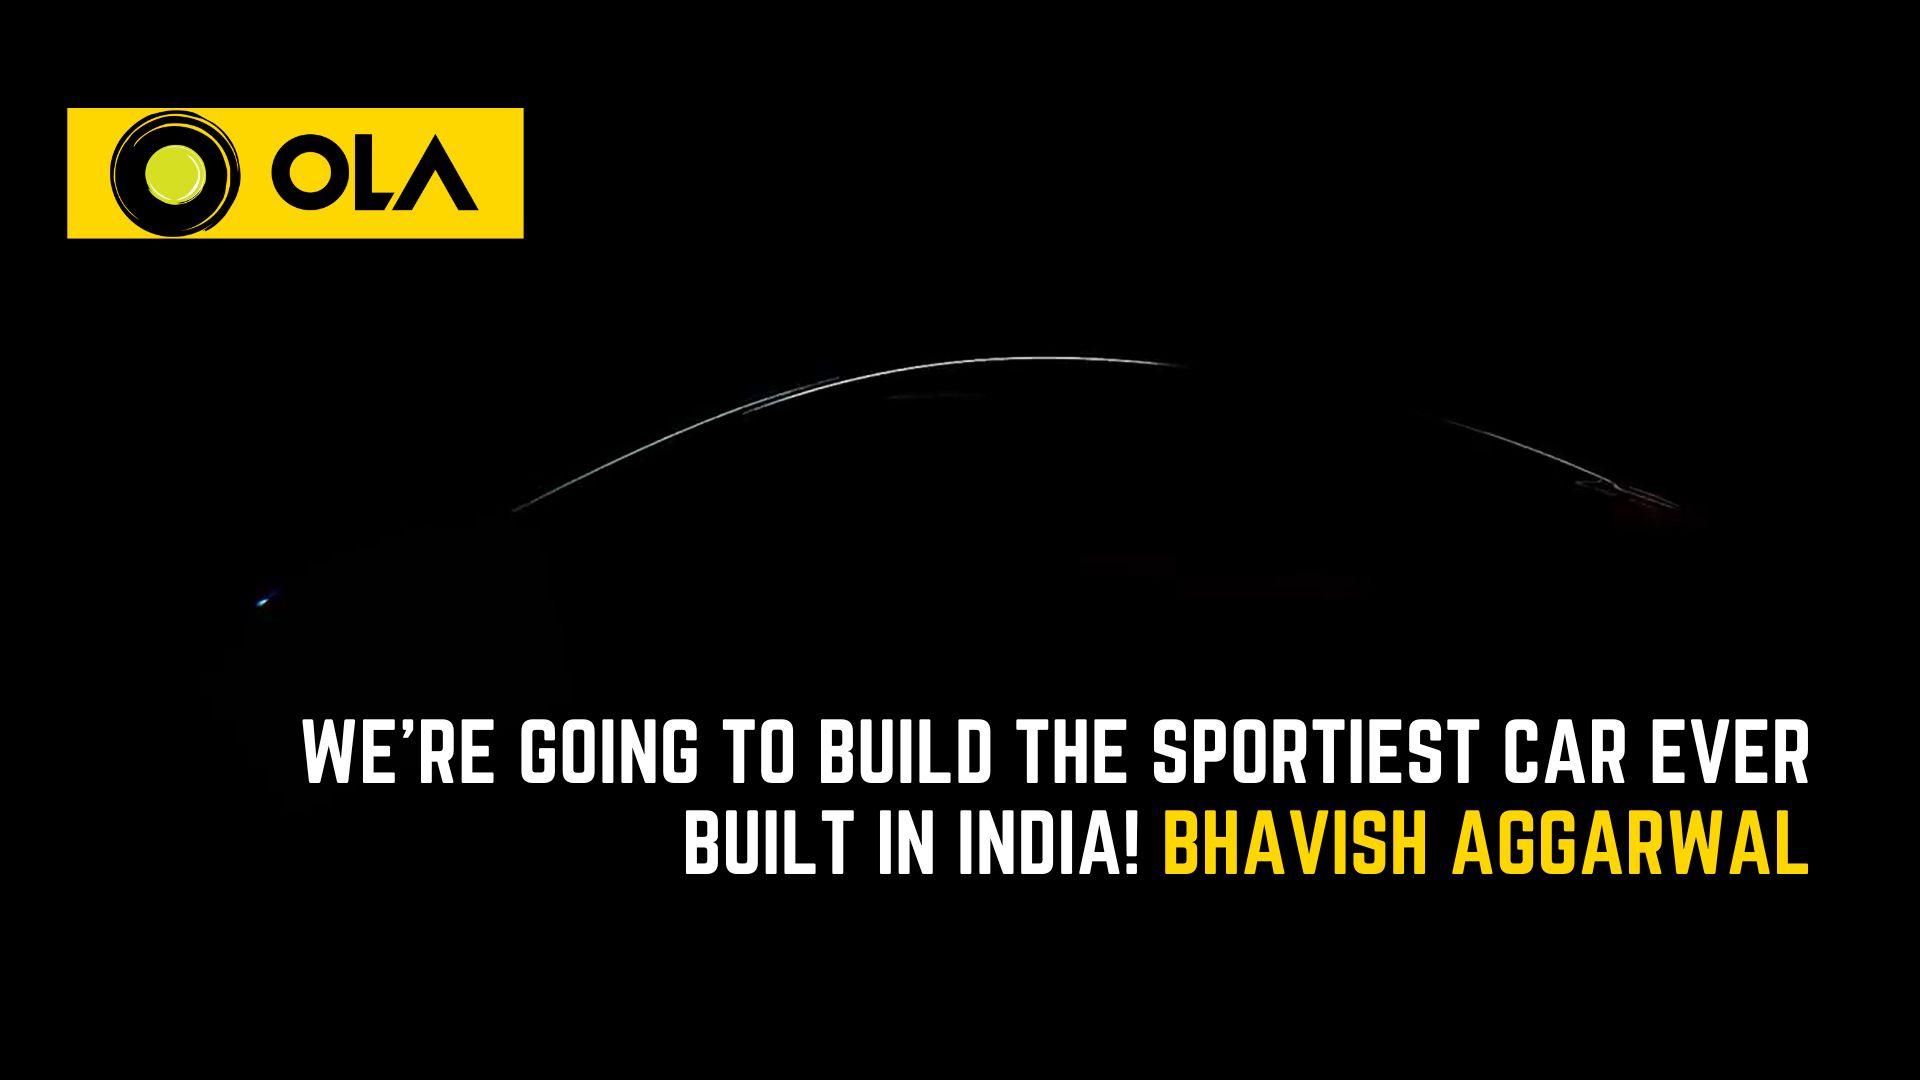 https://e-vehicleinfo.com/ola-going-to-build-the-sportiest-car-ever-built-in-india-bhavish/